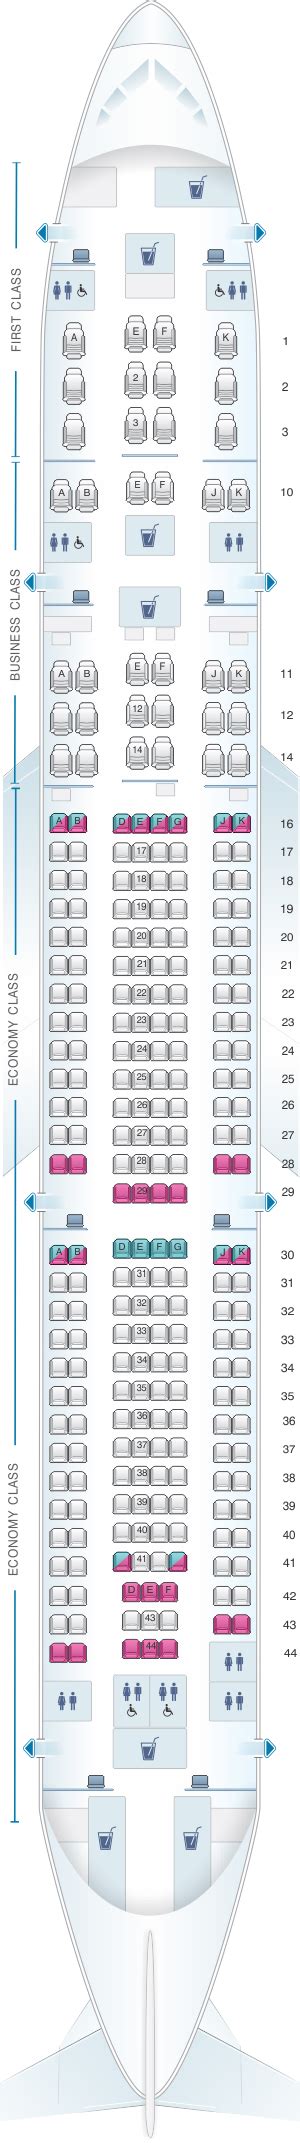 Airbus Industrie A330 300 Seating Chart Qatar Airways Elcho Table